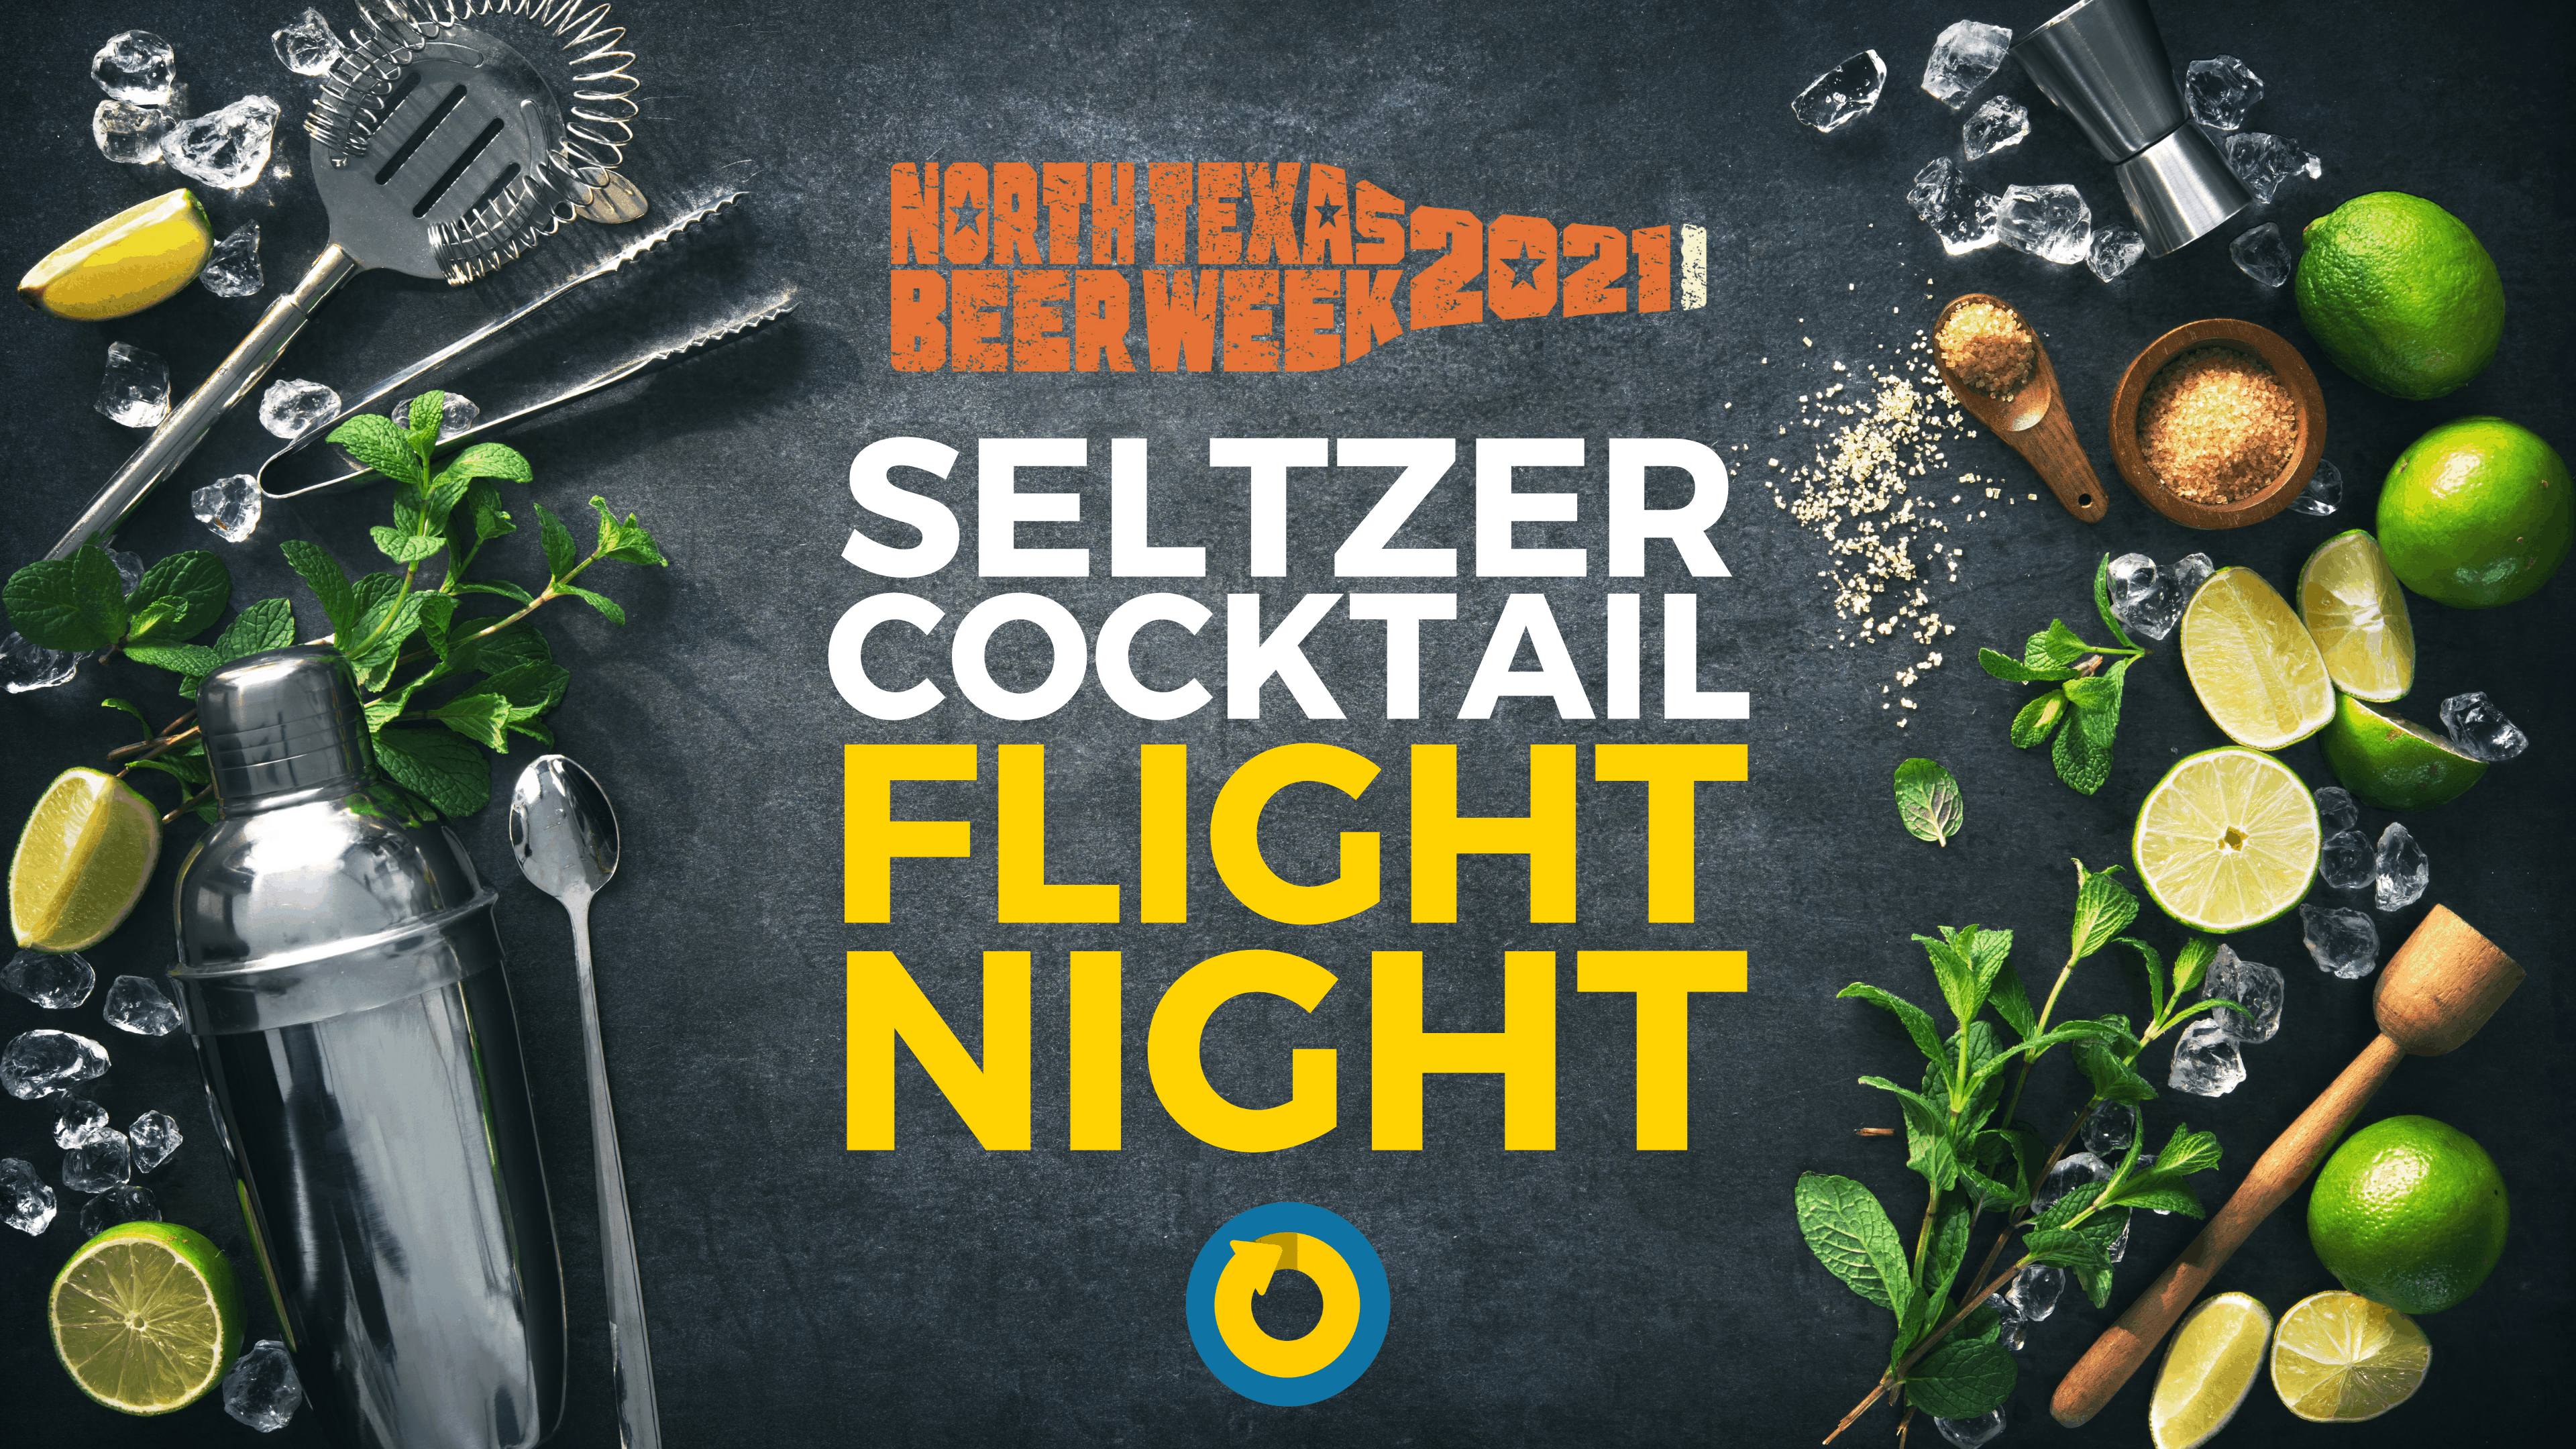 NTX Beer Week Seltzer Cocktail Flight Night